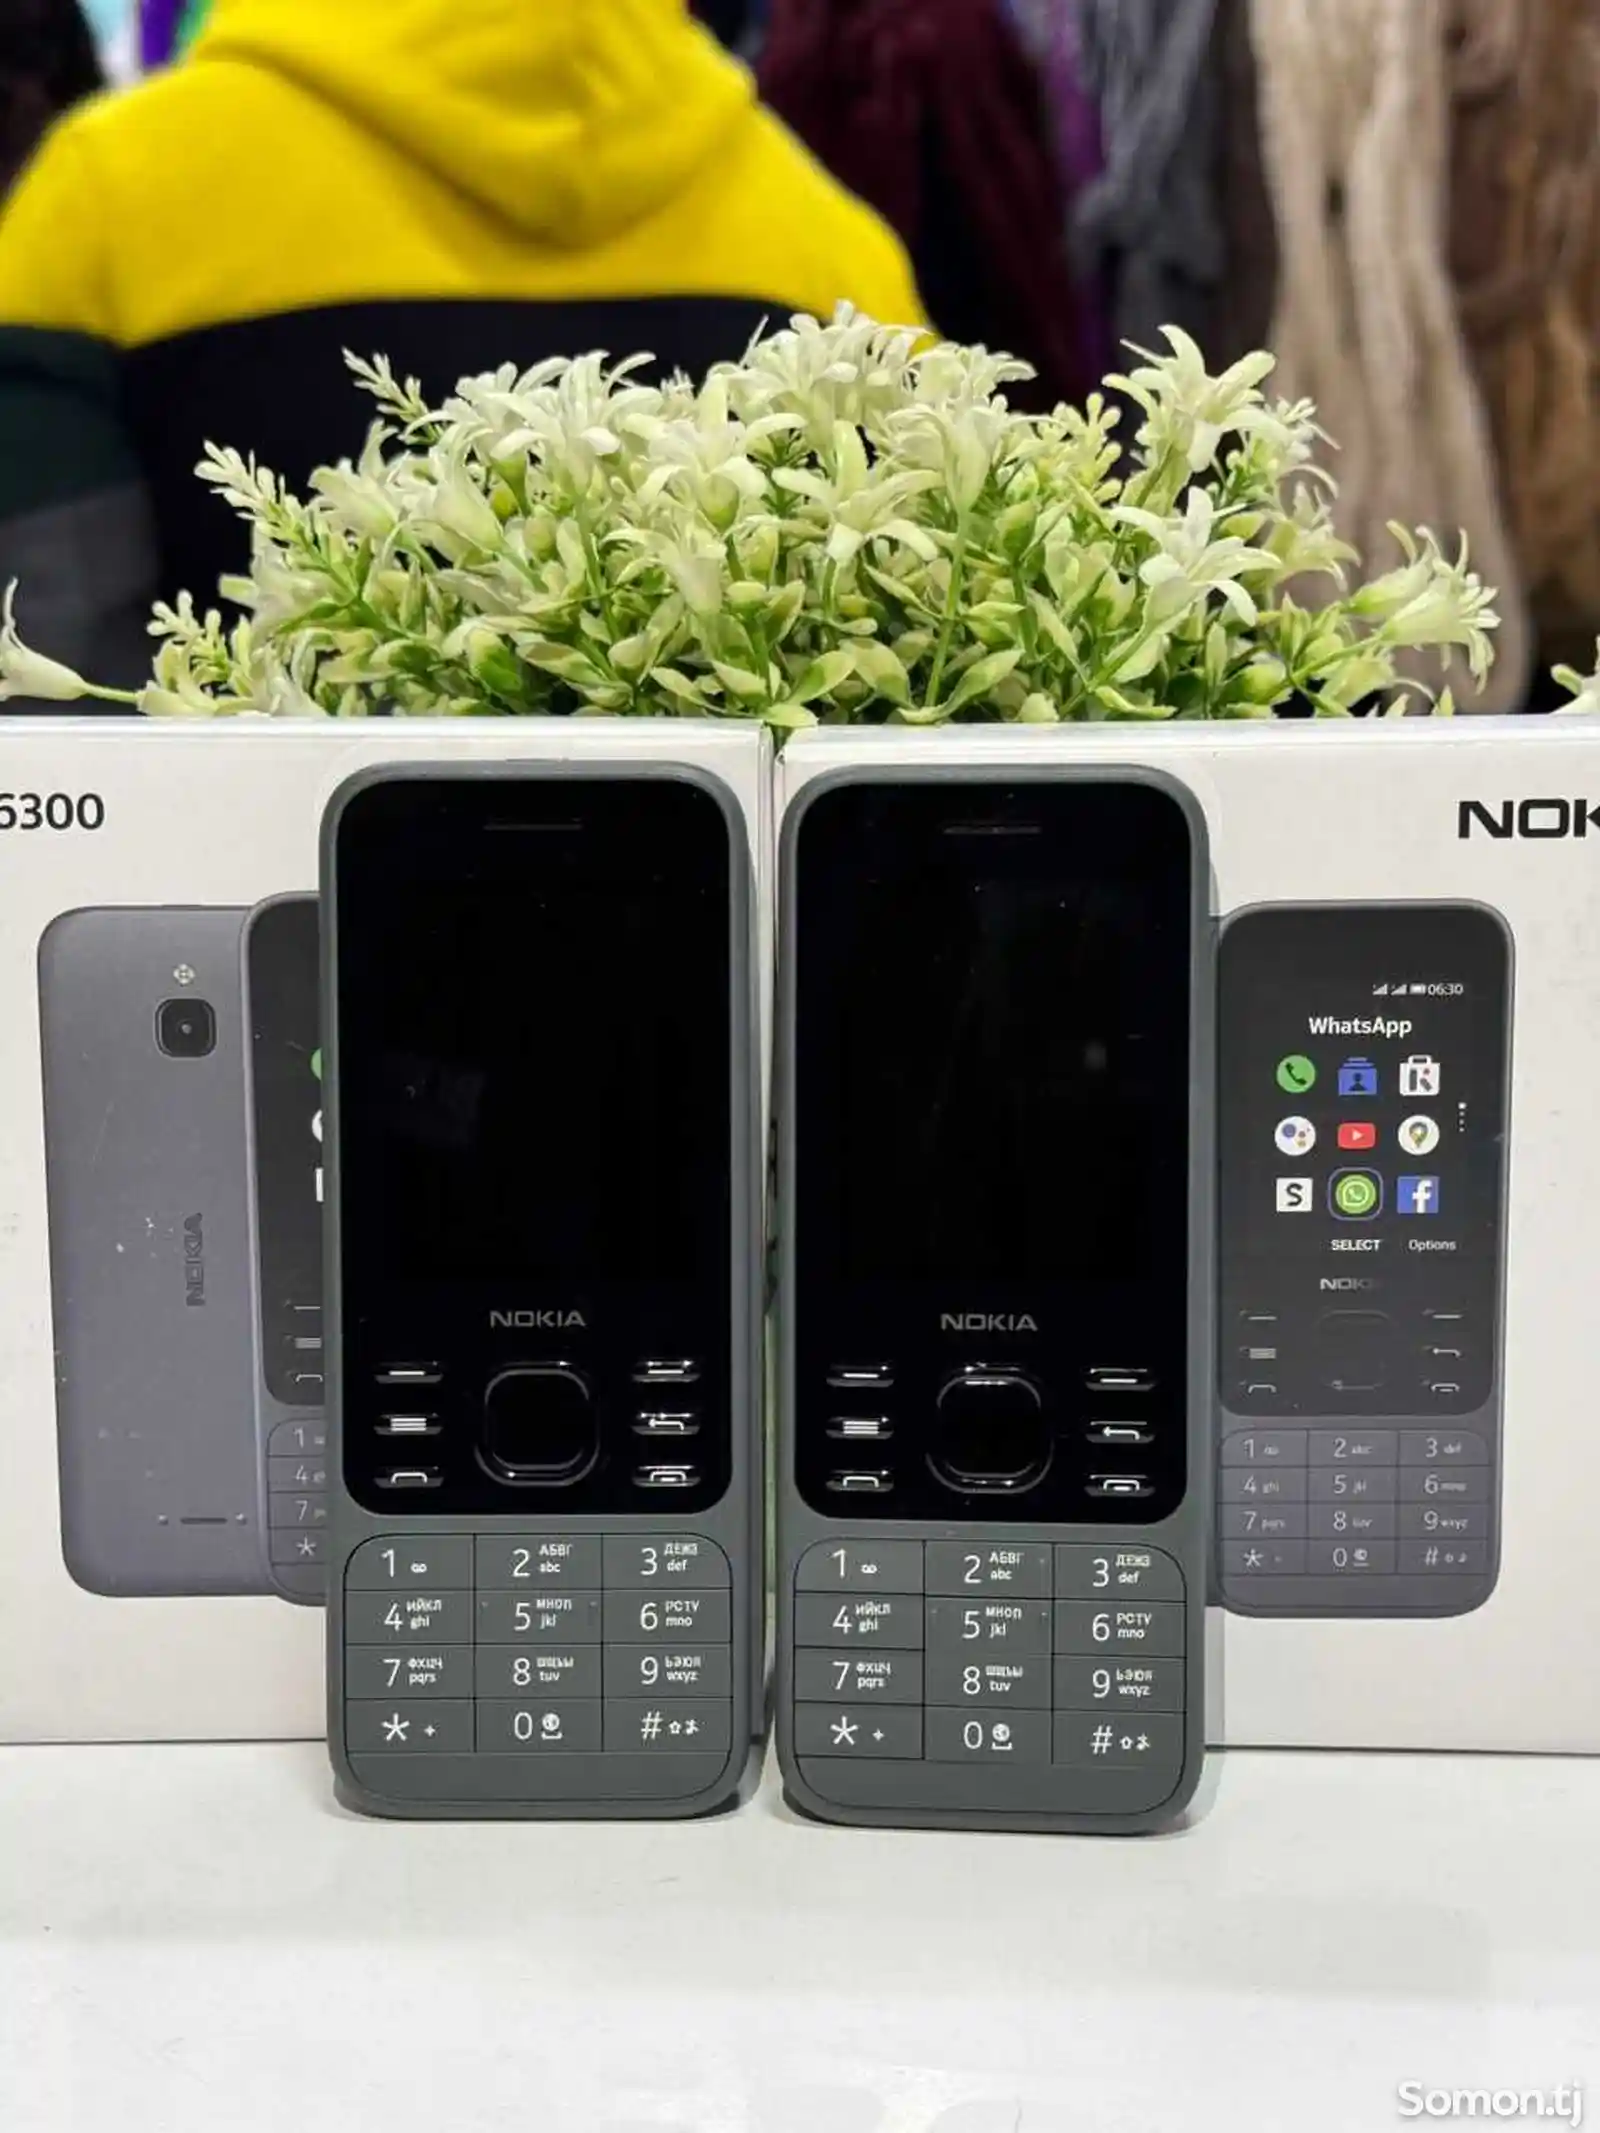 Nokia 6300 dual SIM